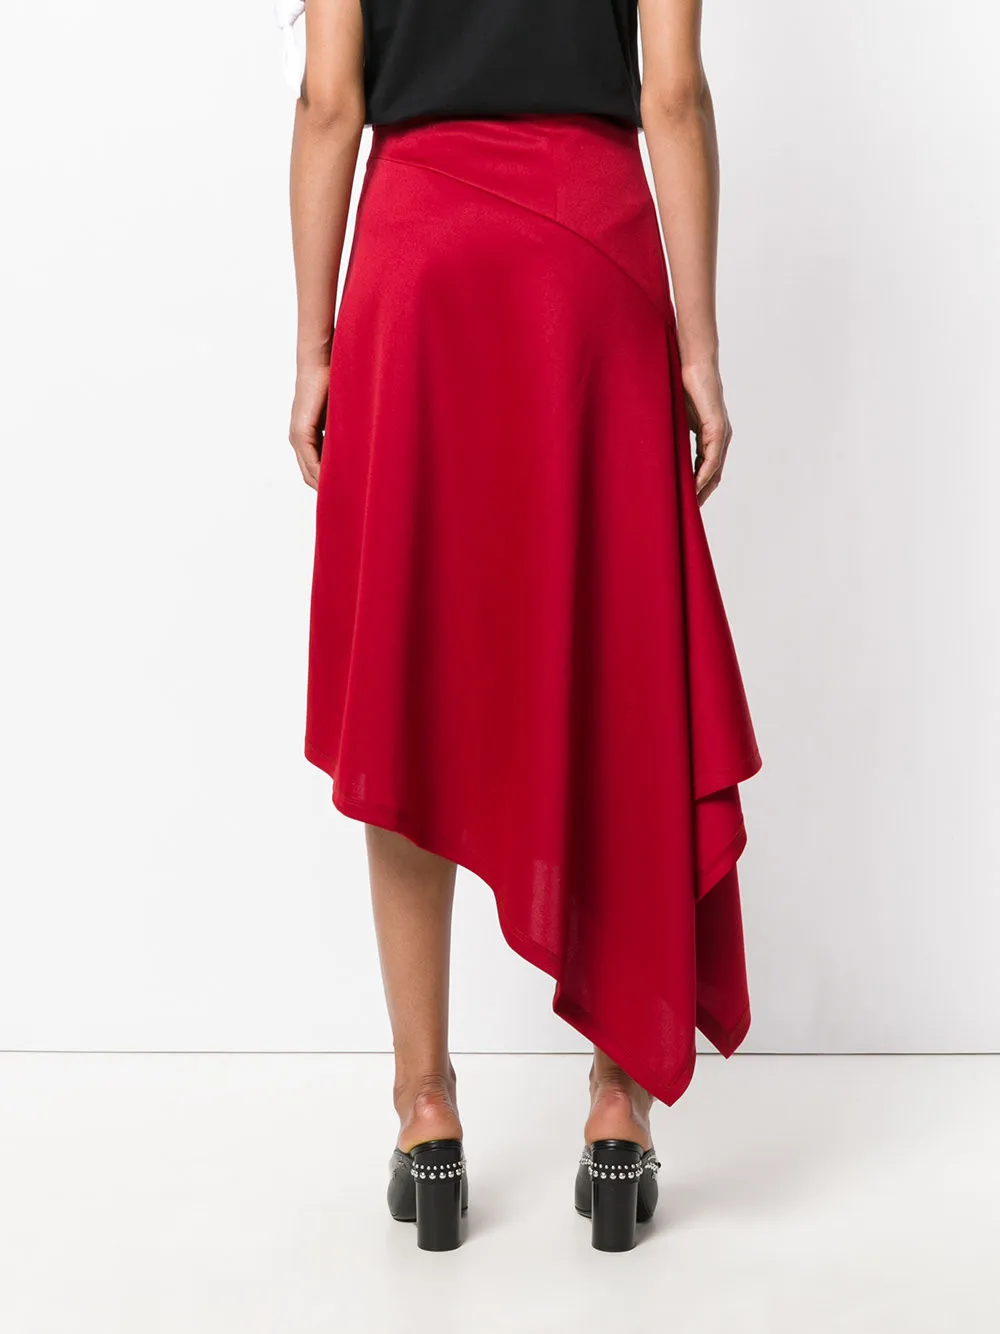 Wholesale Fashion Party Wear Long Skirts Women Hot Red Asymmetrical ...